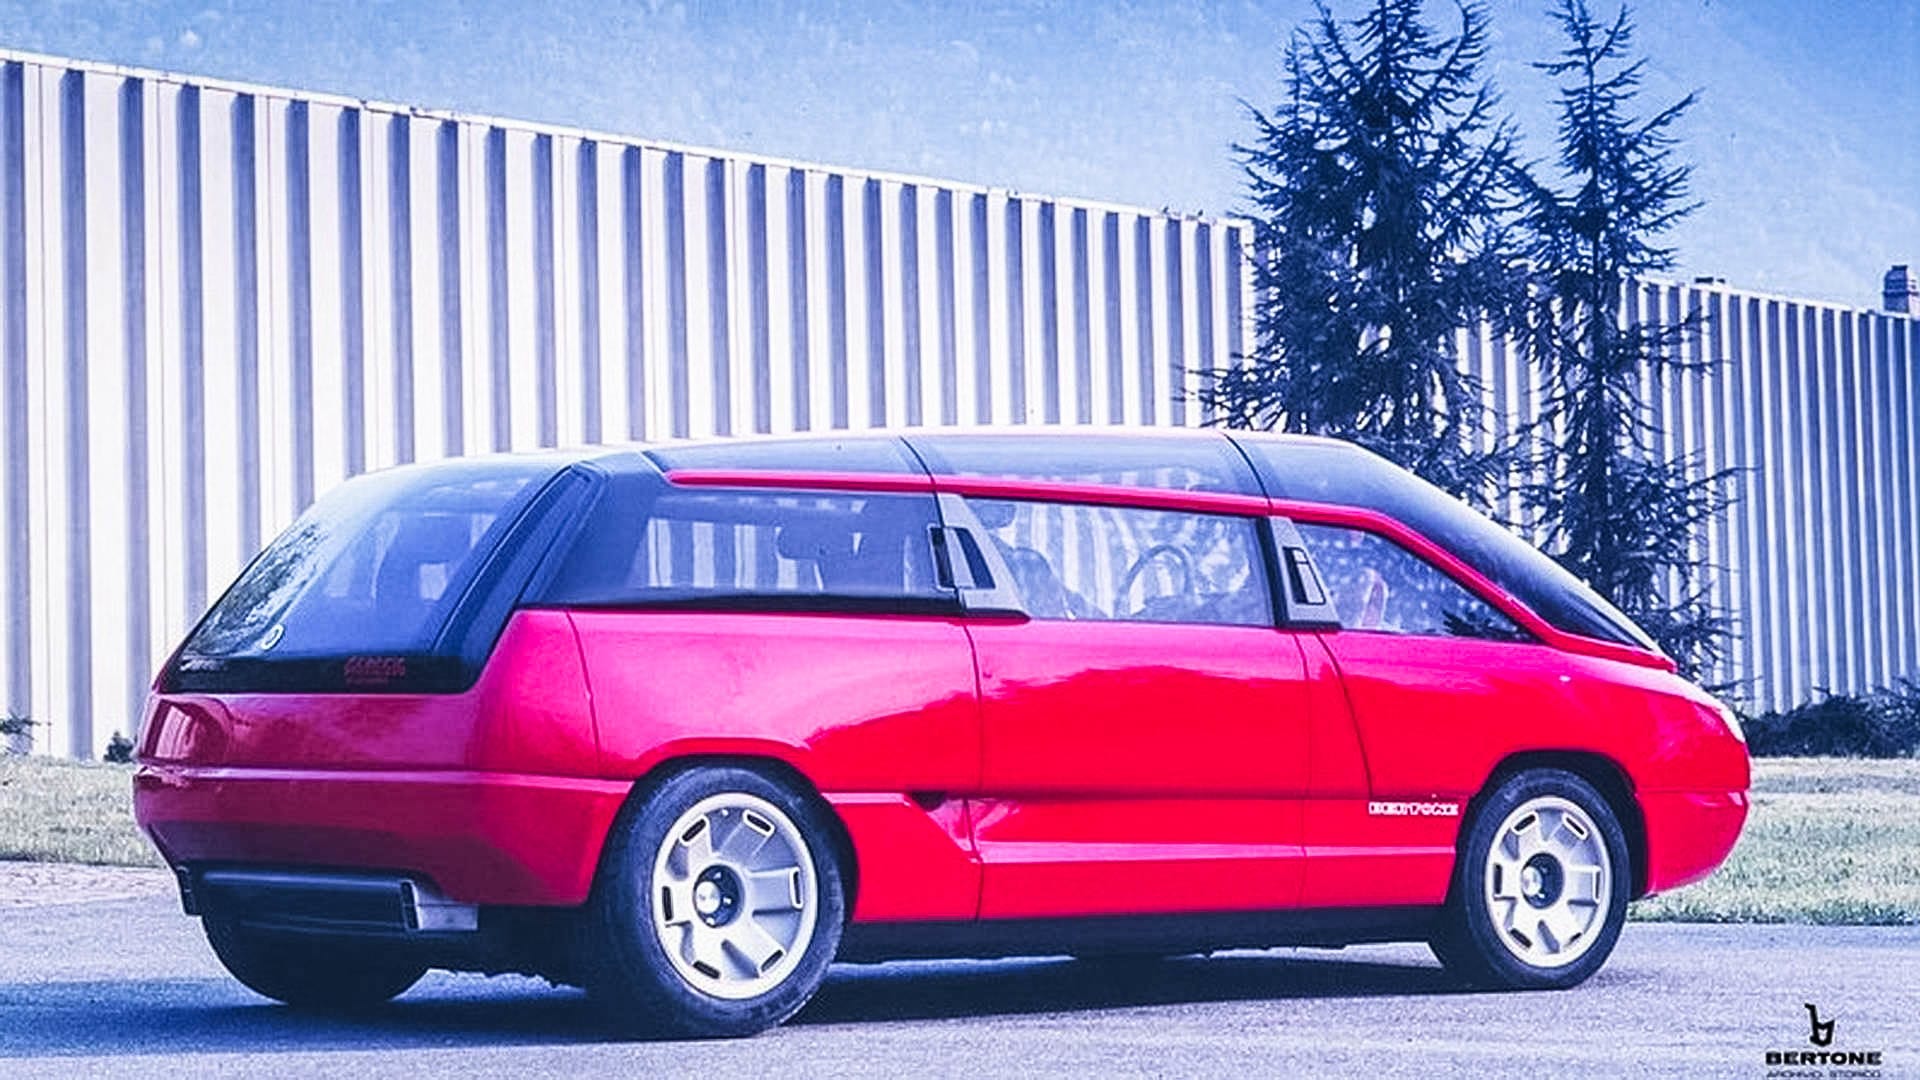 Crazy Concepts: Lamborghini Genesis - Drive